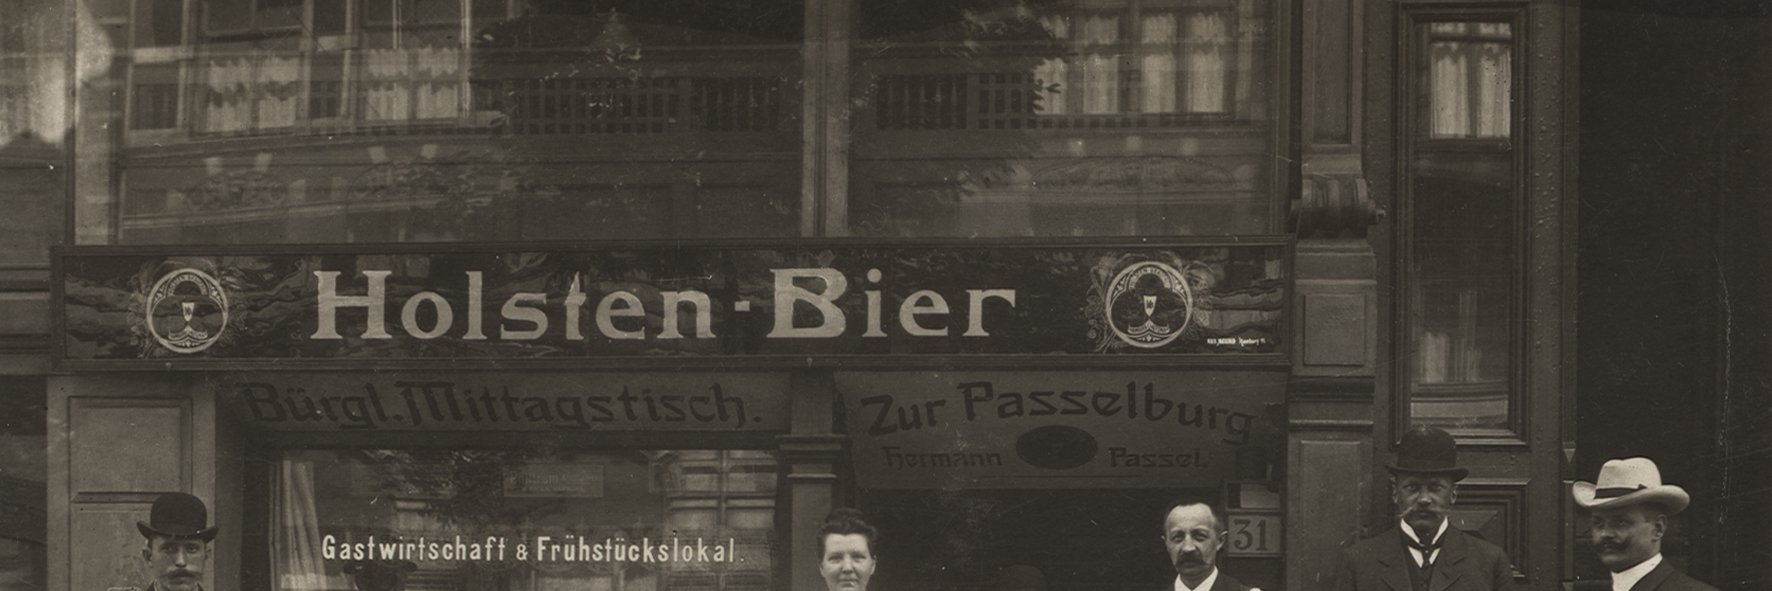 Fotopostkarte um 1900: Gastwirtschaft und Frühstückslokal Passel am Rödingsmarkt in Hamburg